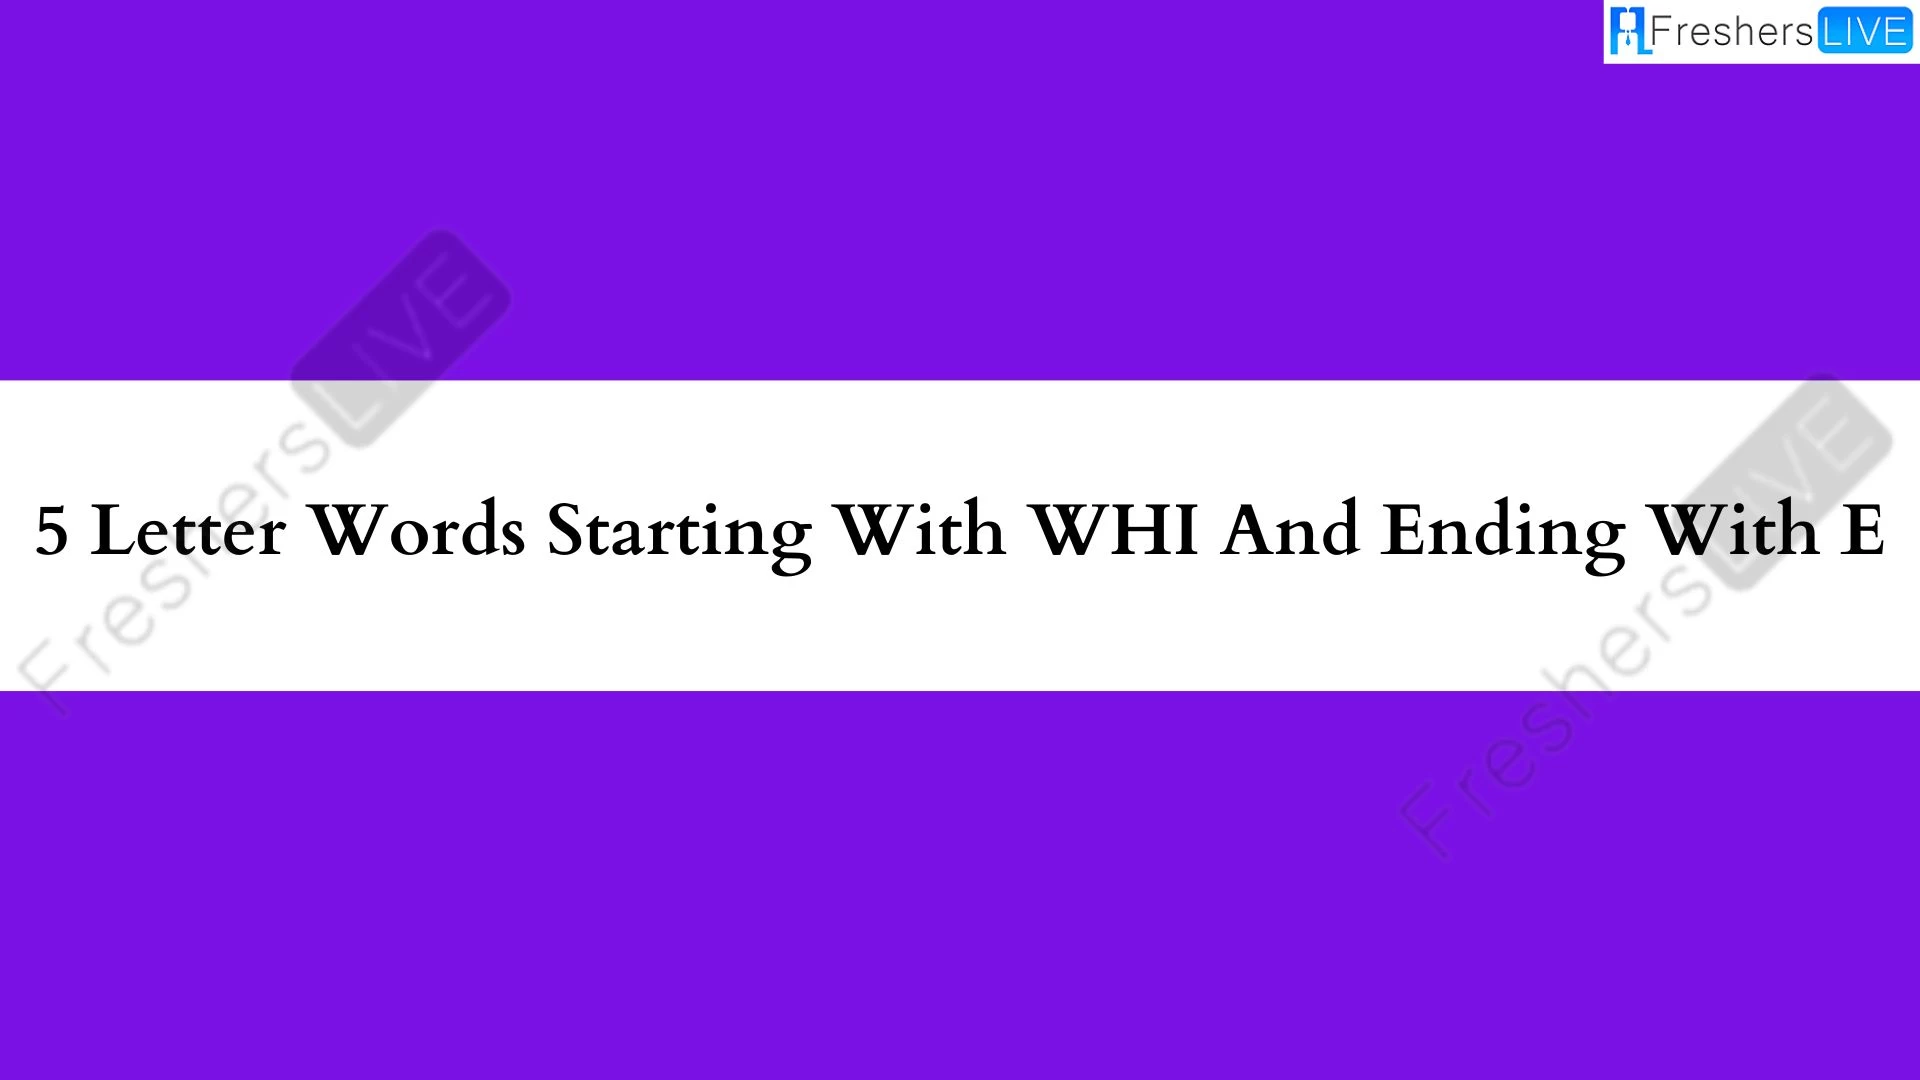 Palabra de 5 letras que comienza con WHI y termina con E.